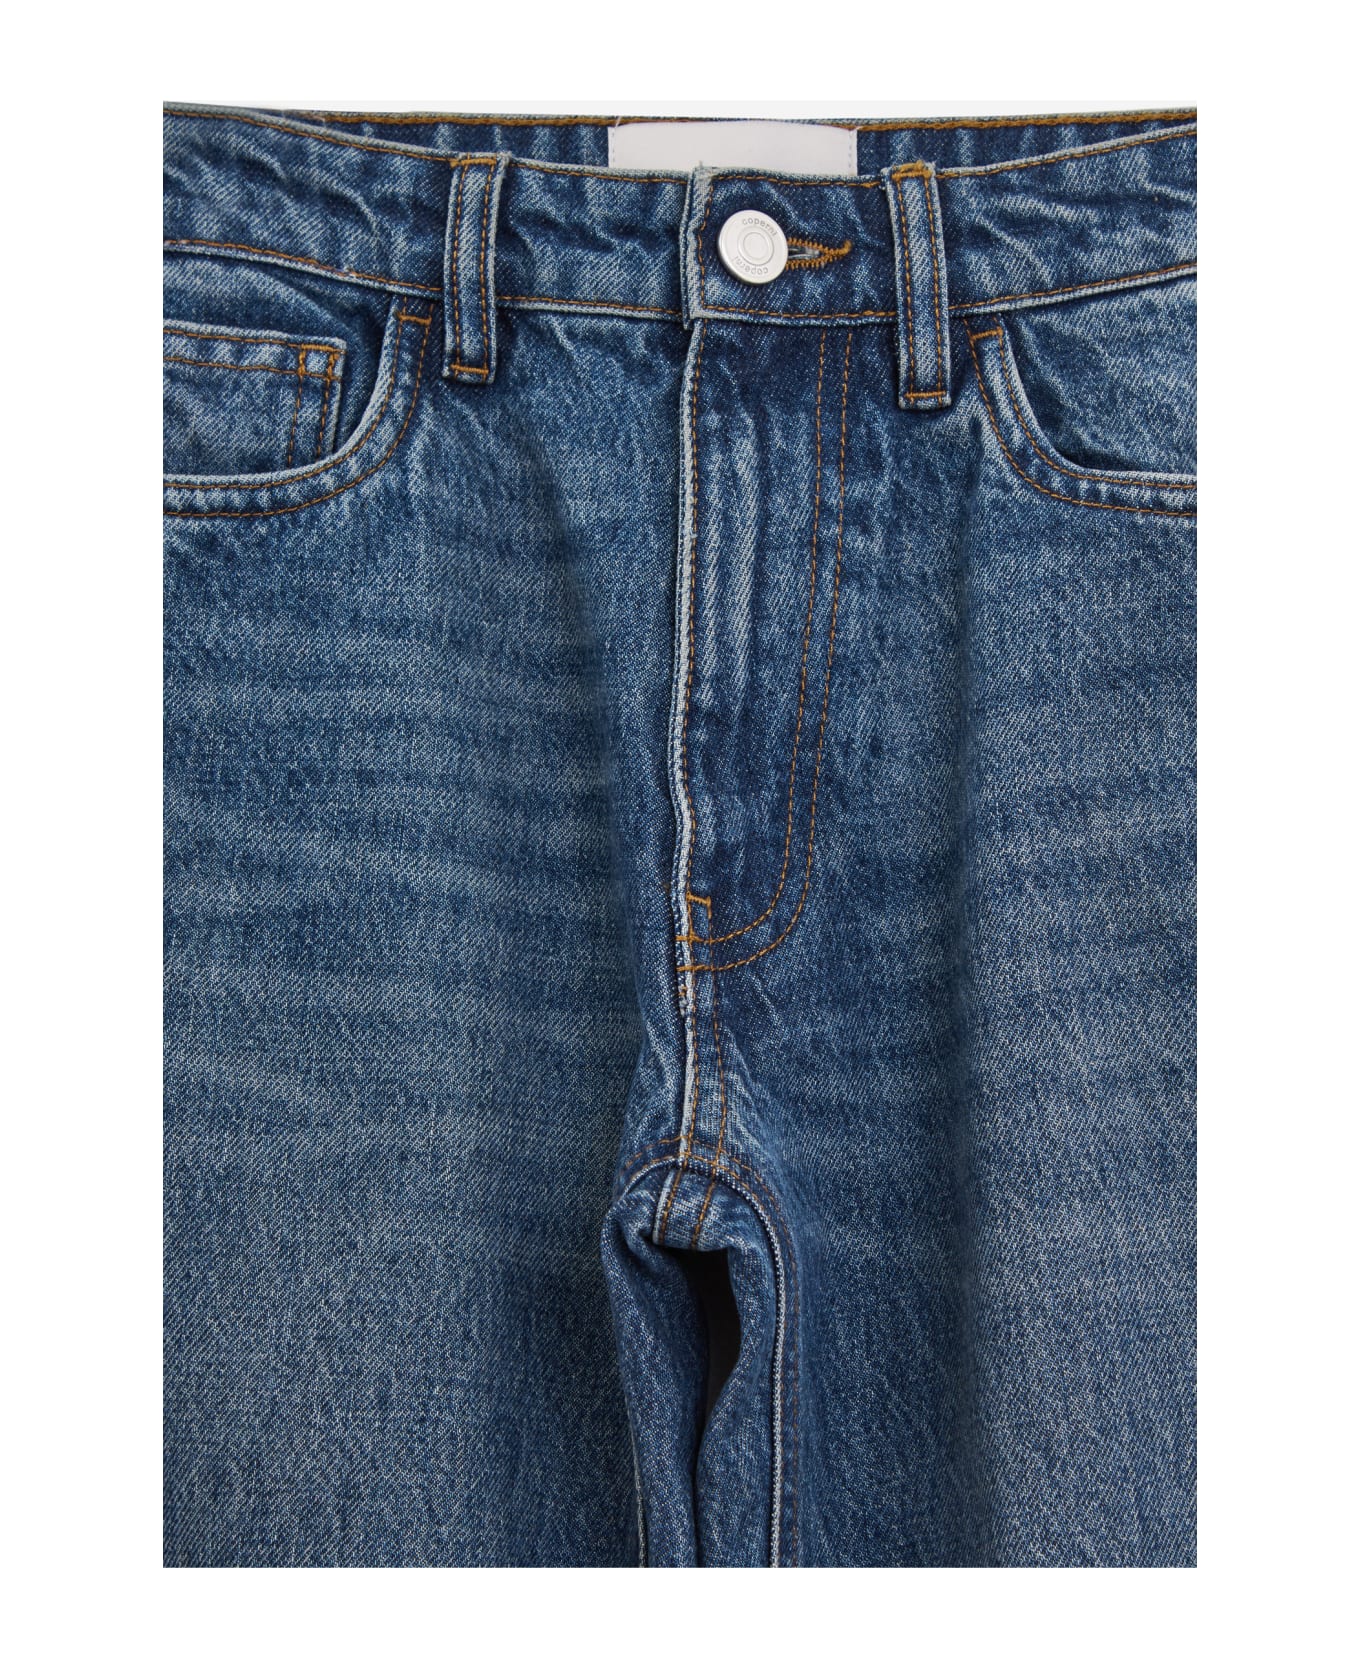 Coperni Open Knee Jeans Jeans - BLUE デニム